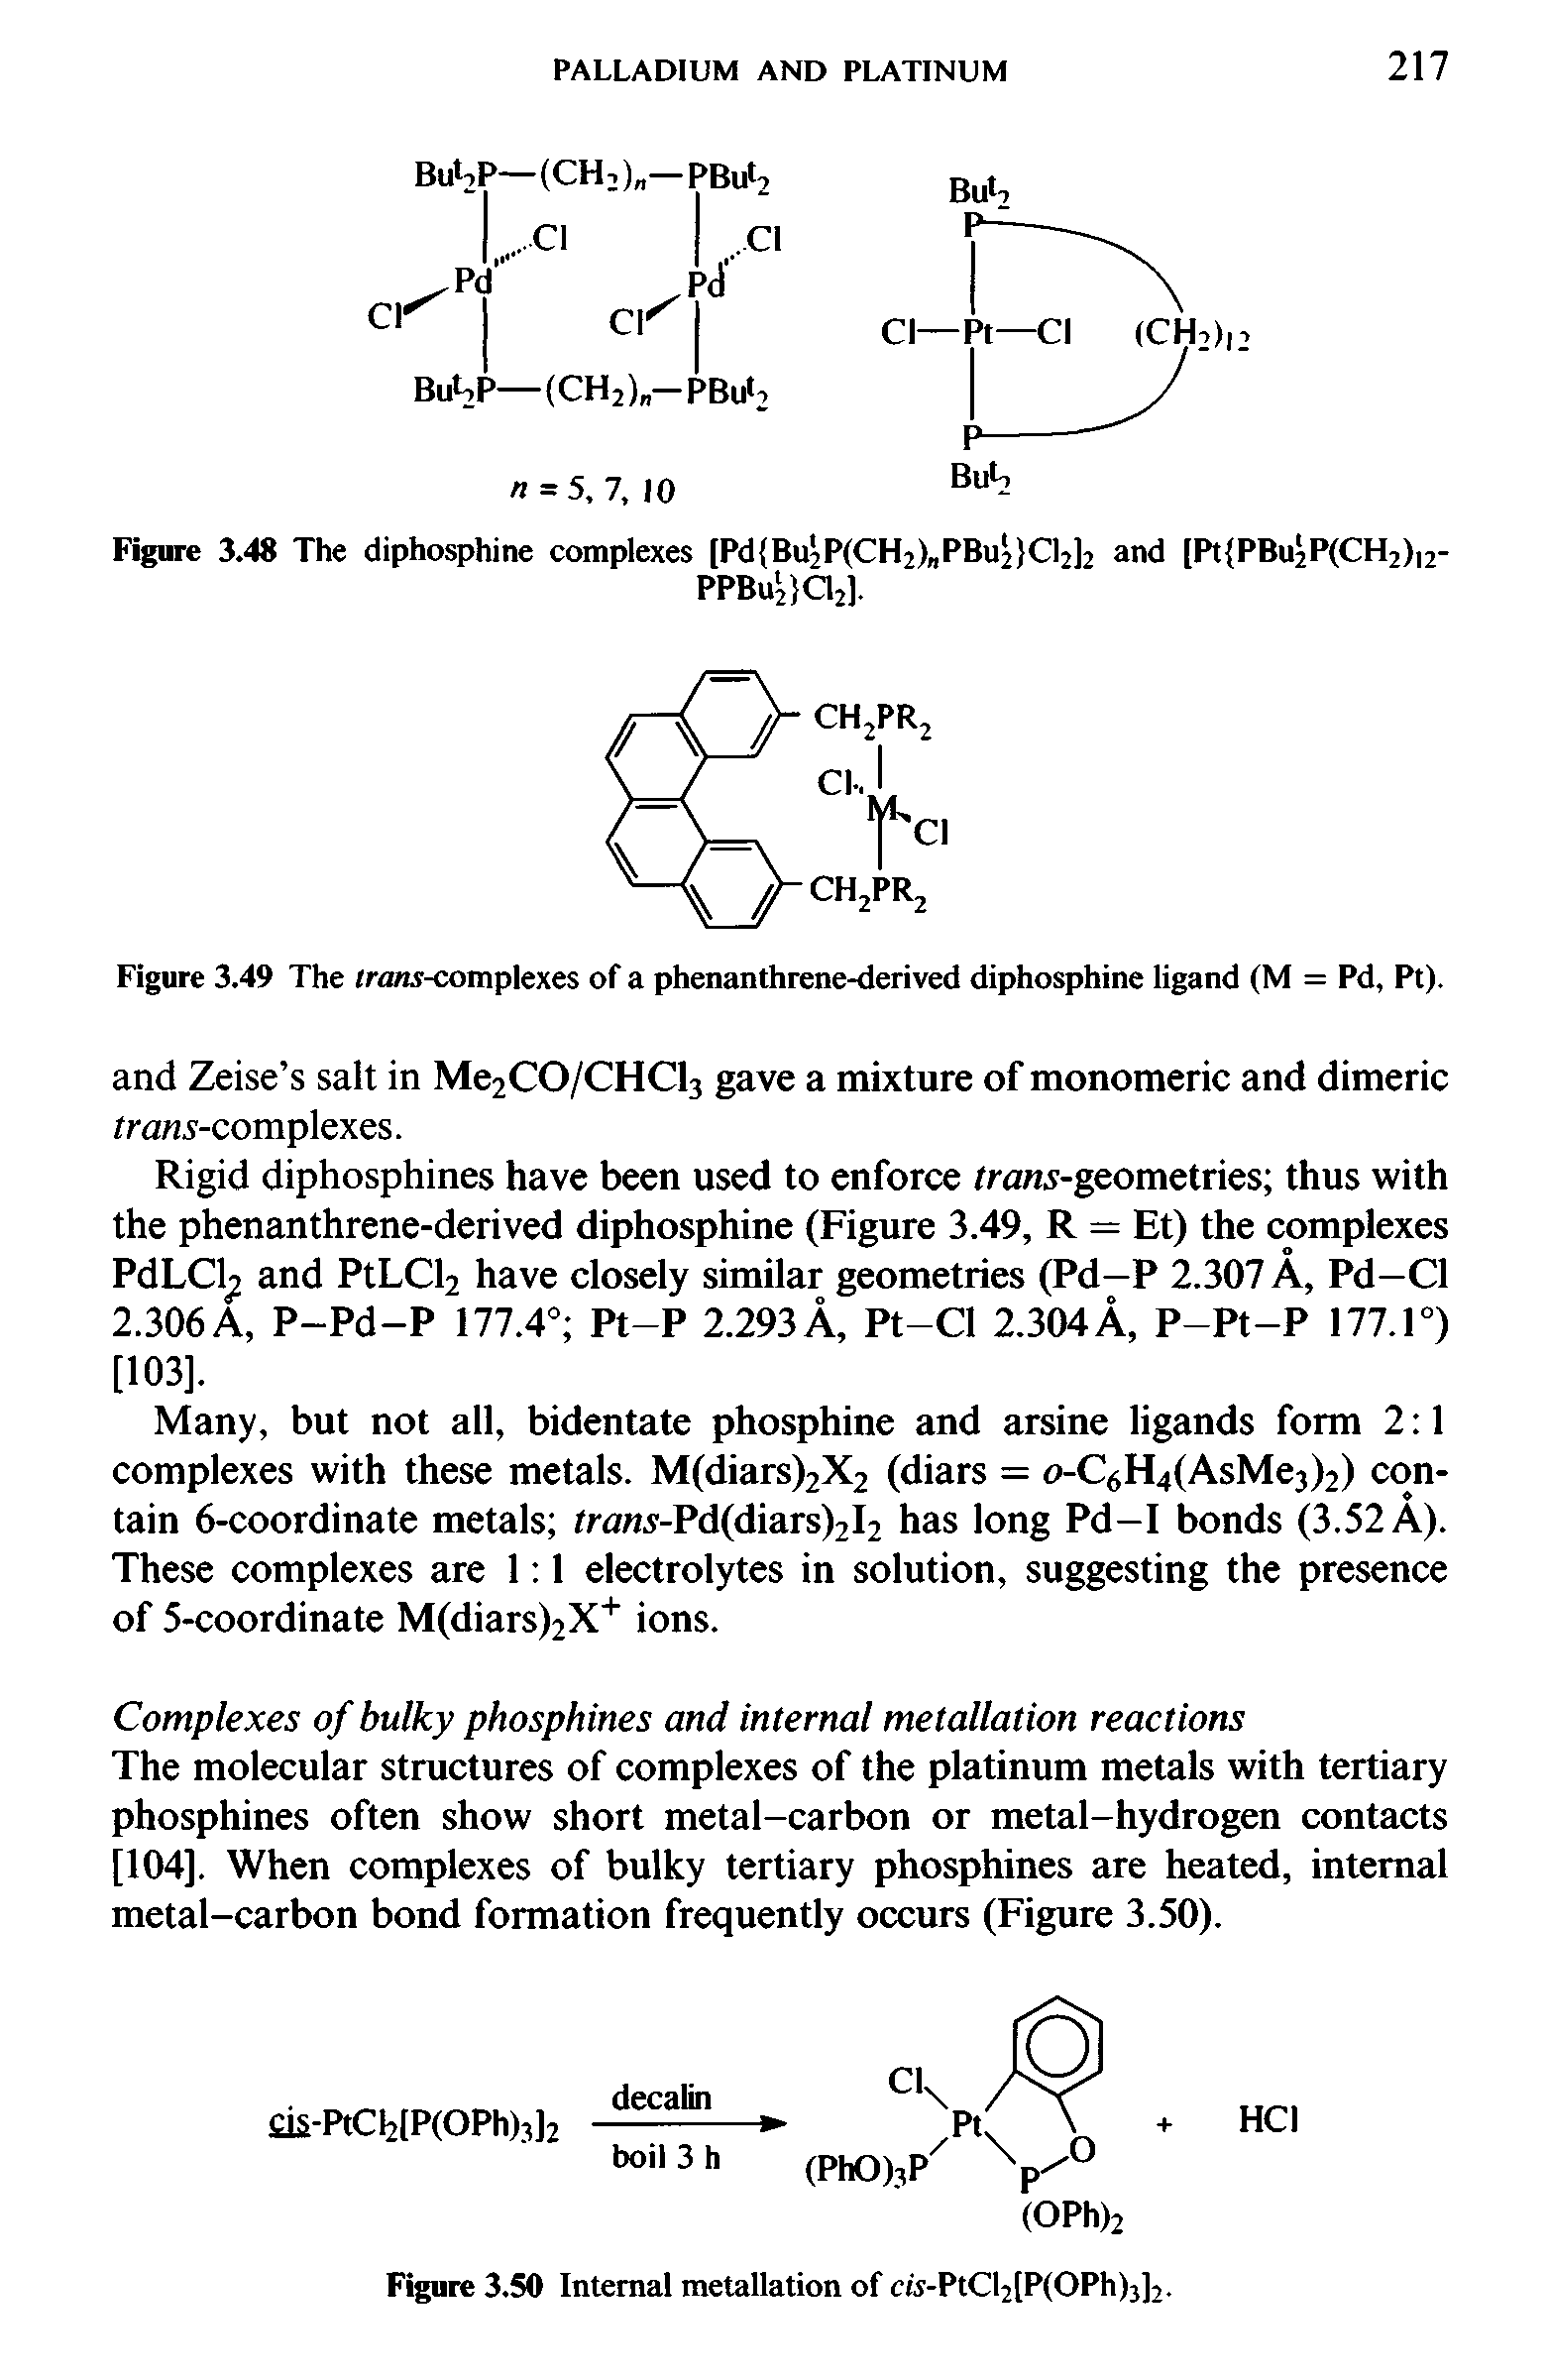 Figure 3.49 The (ra .v-complexes of a phenanthrene-derived diphosphine ligand (M = Pd, Pt).